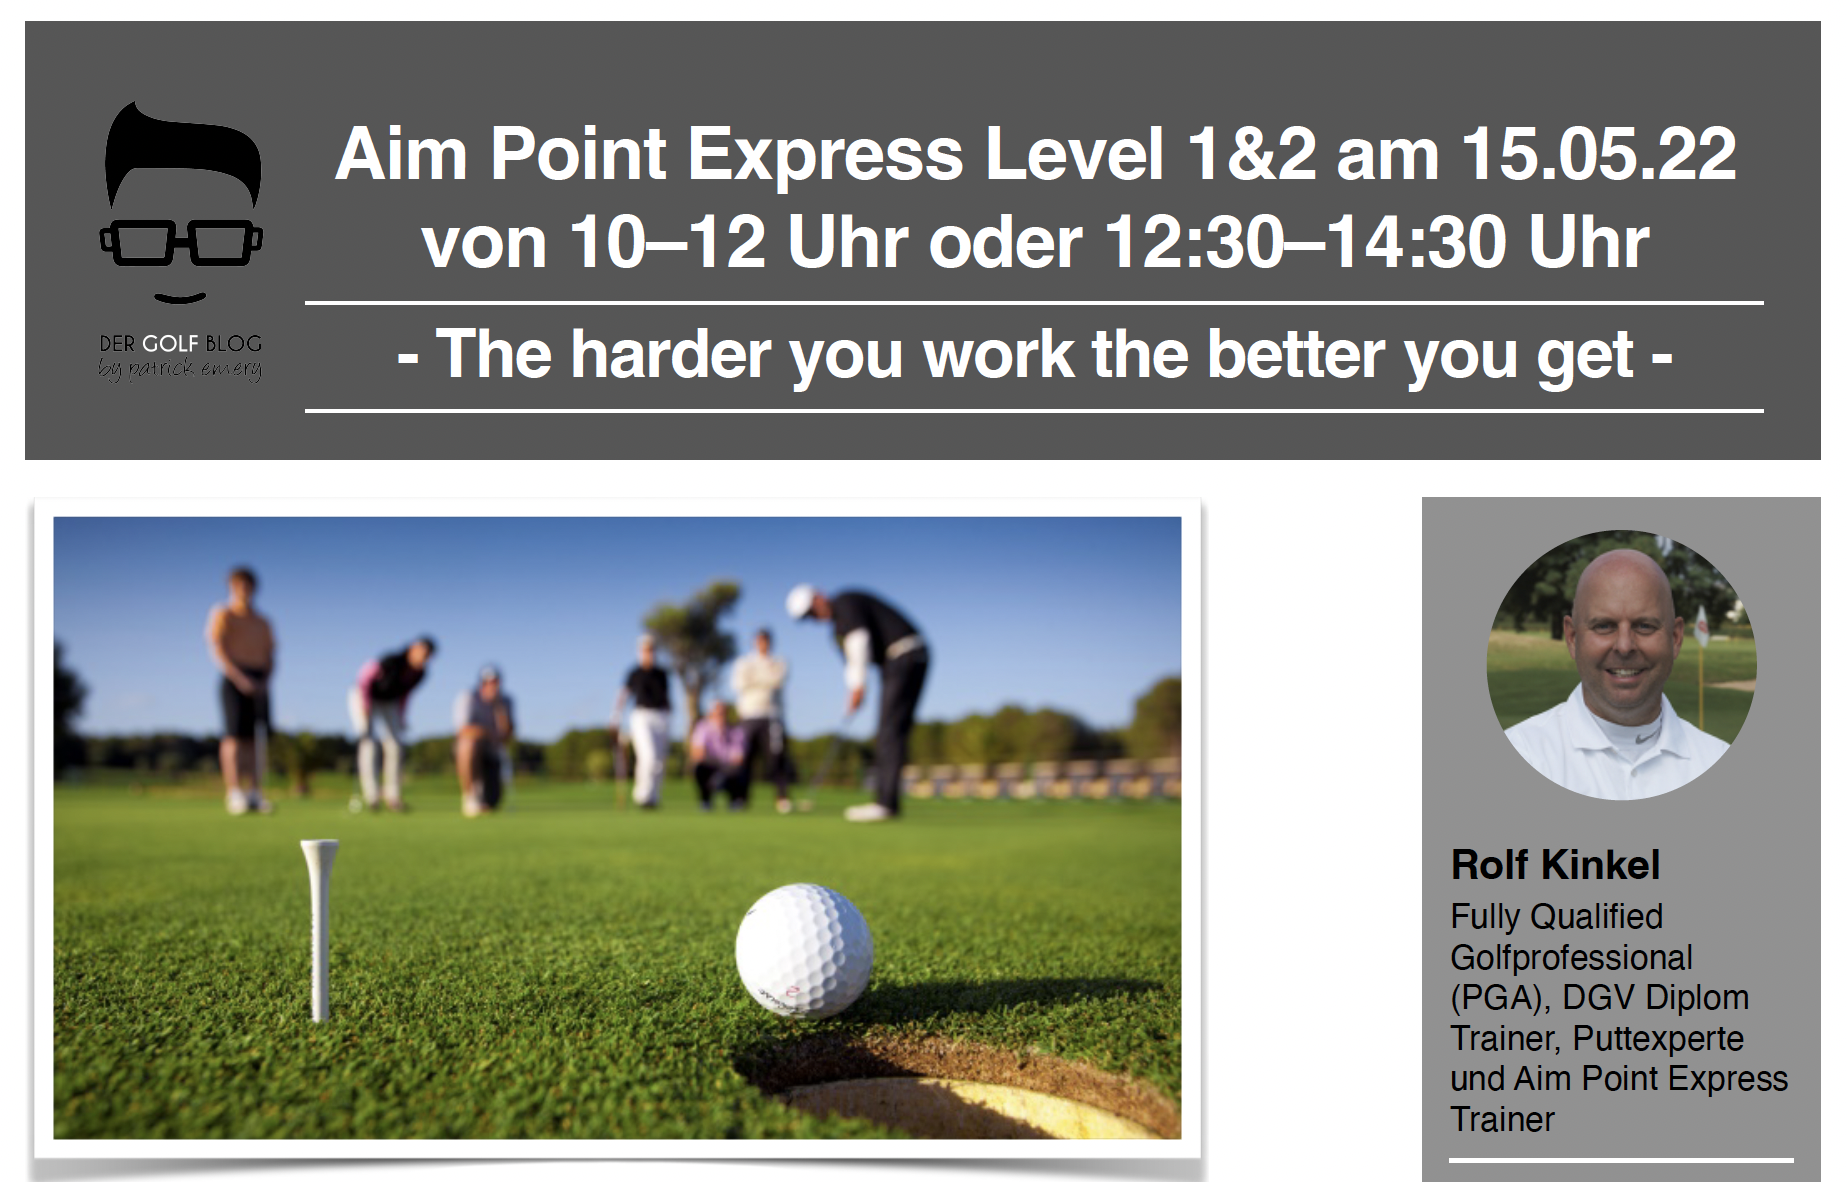 Aim Point Express powered by Der Golf Blog 2022